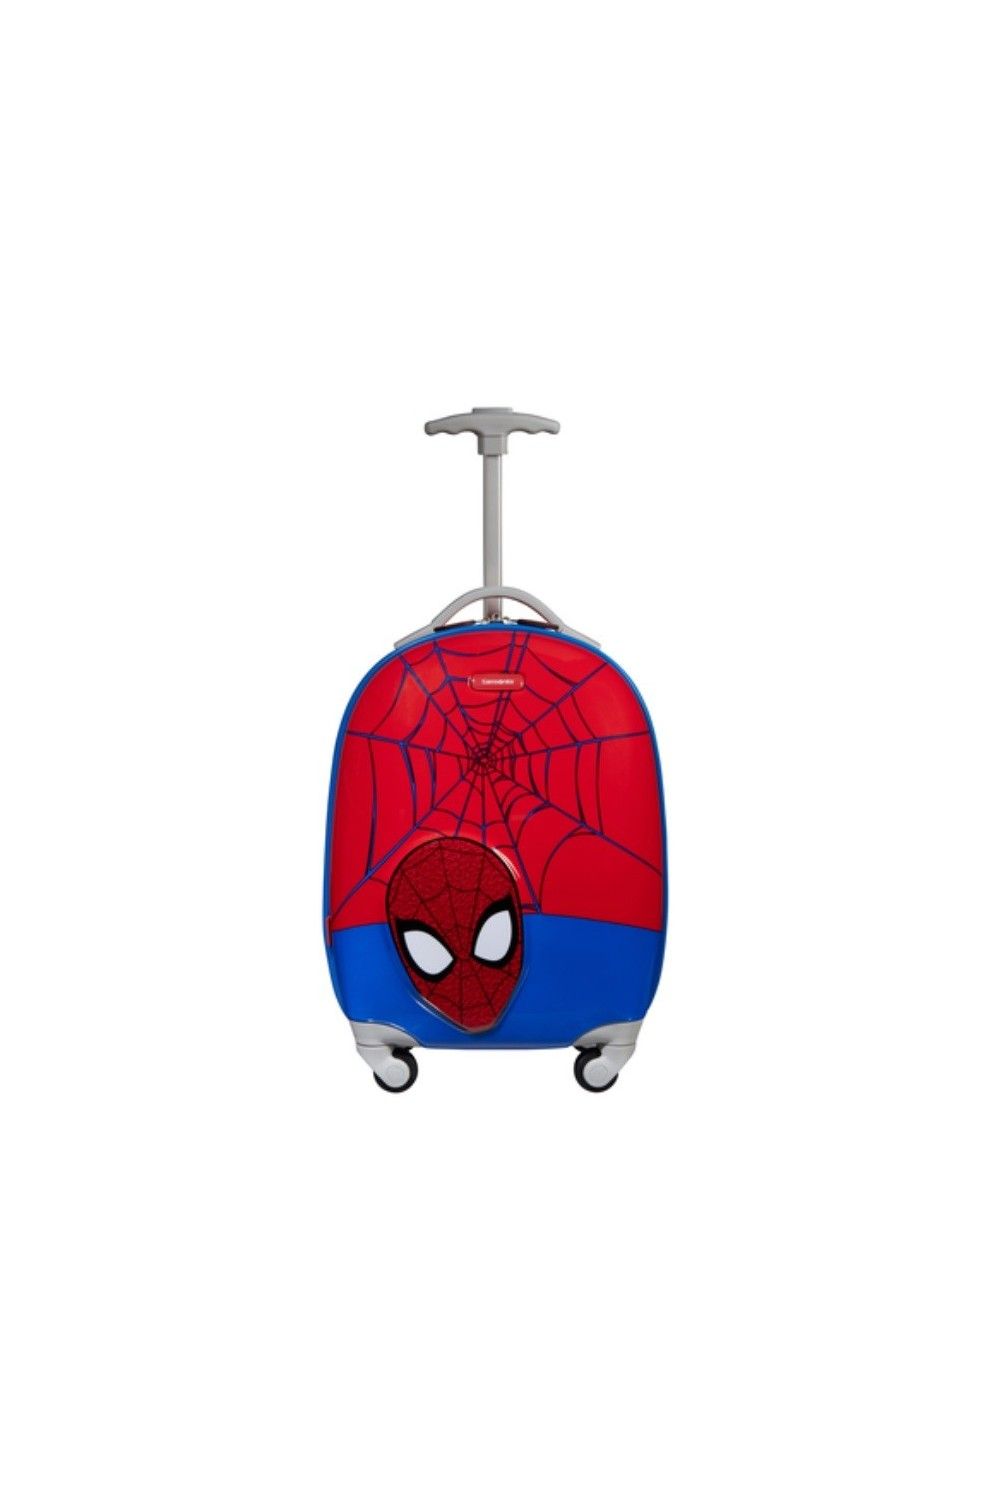 Kids suitcase by Samsonite Disney Ultimate 2.0 Marvel Spider-Man 46 cm 4 wheel